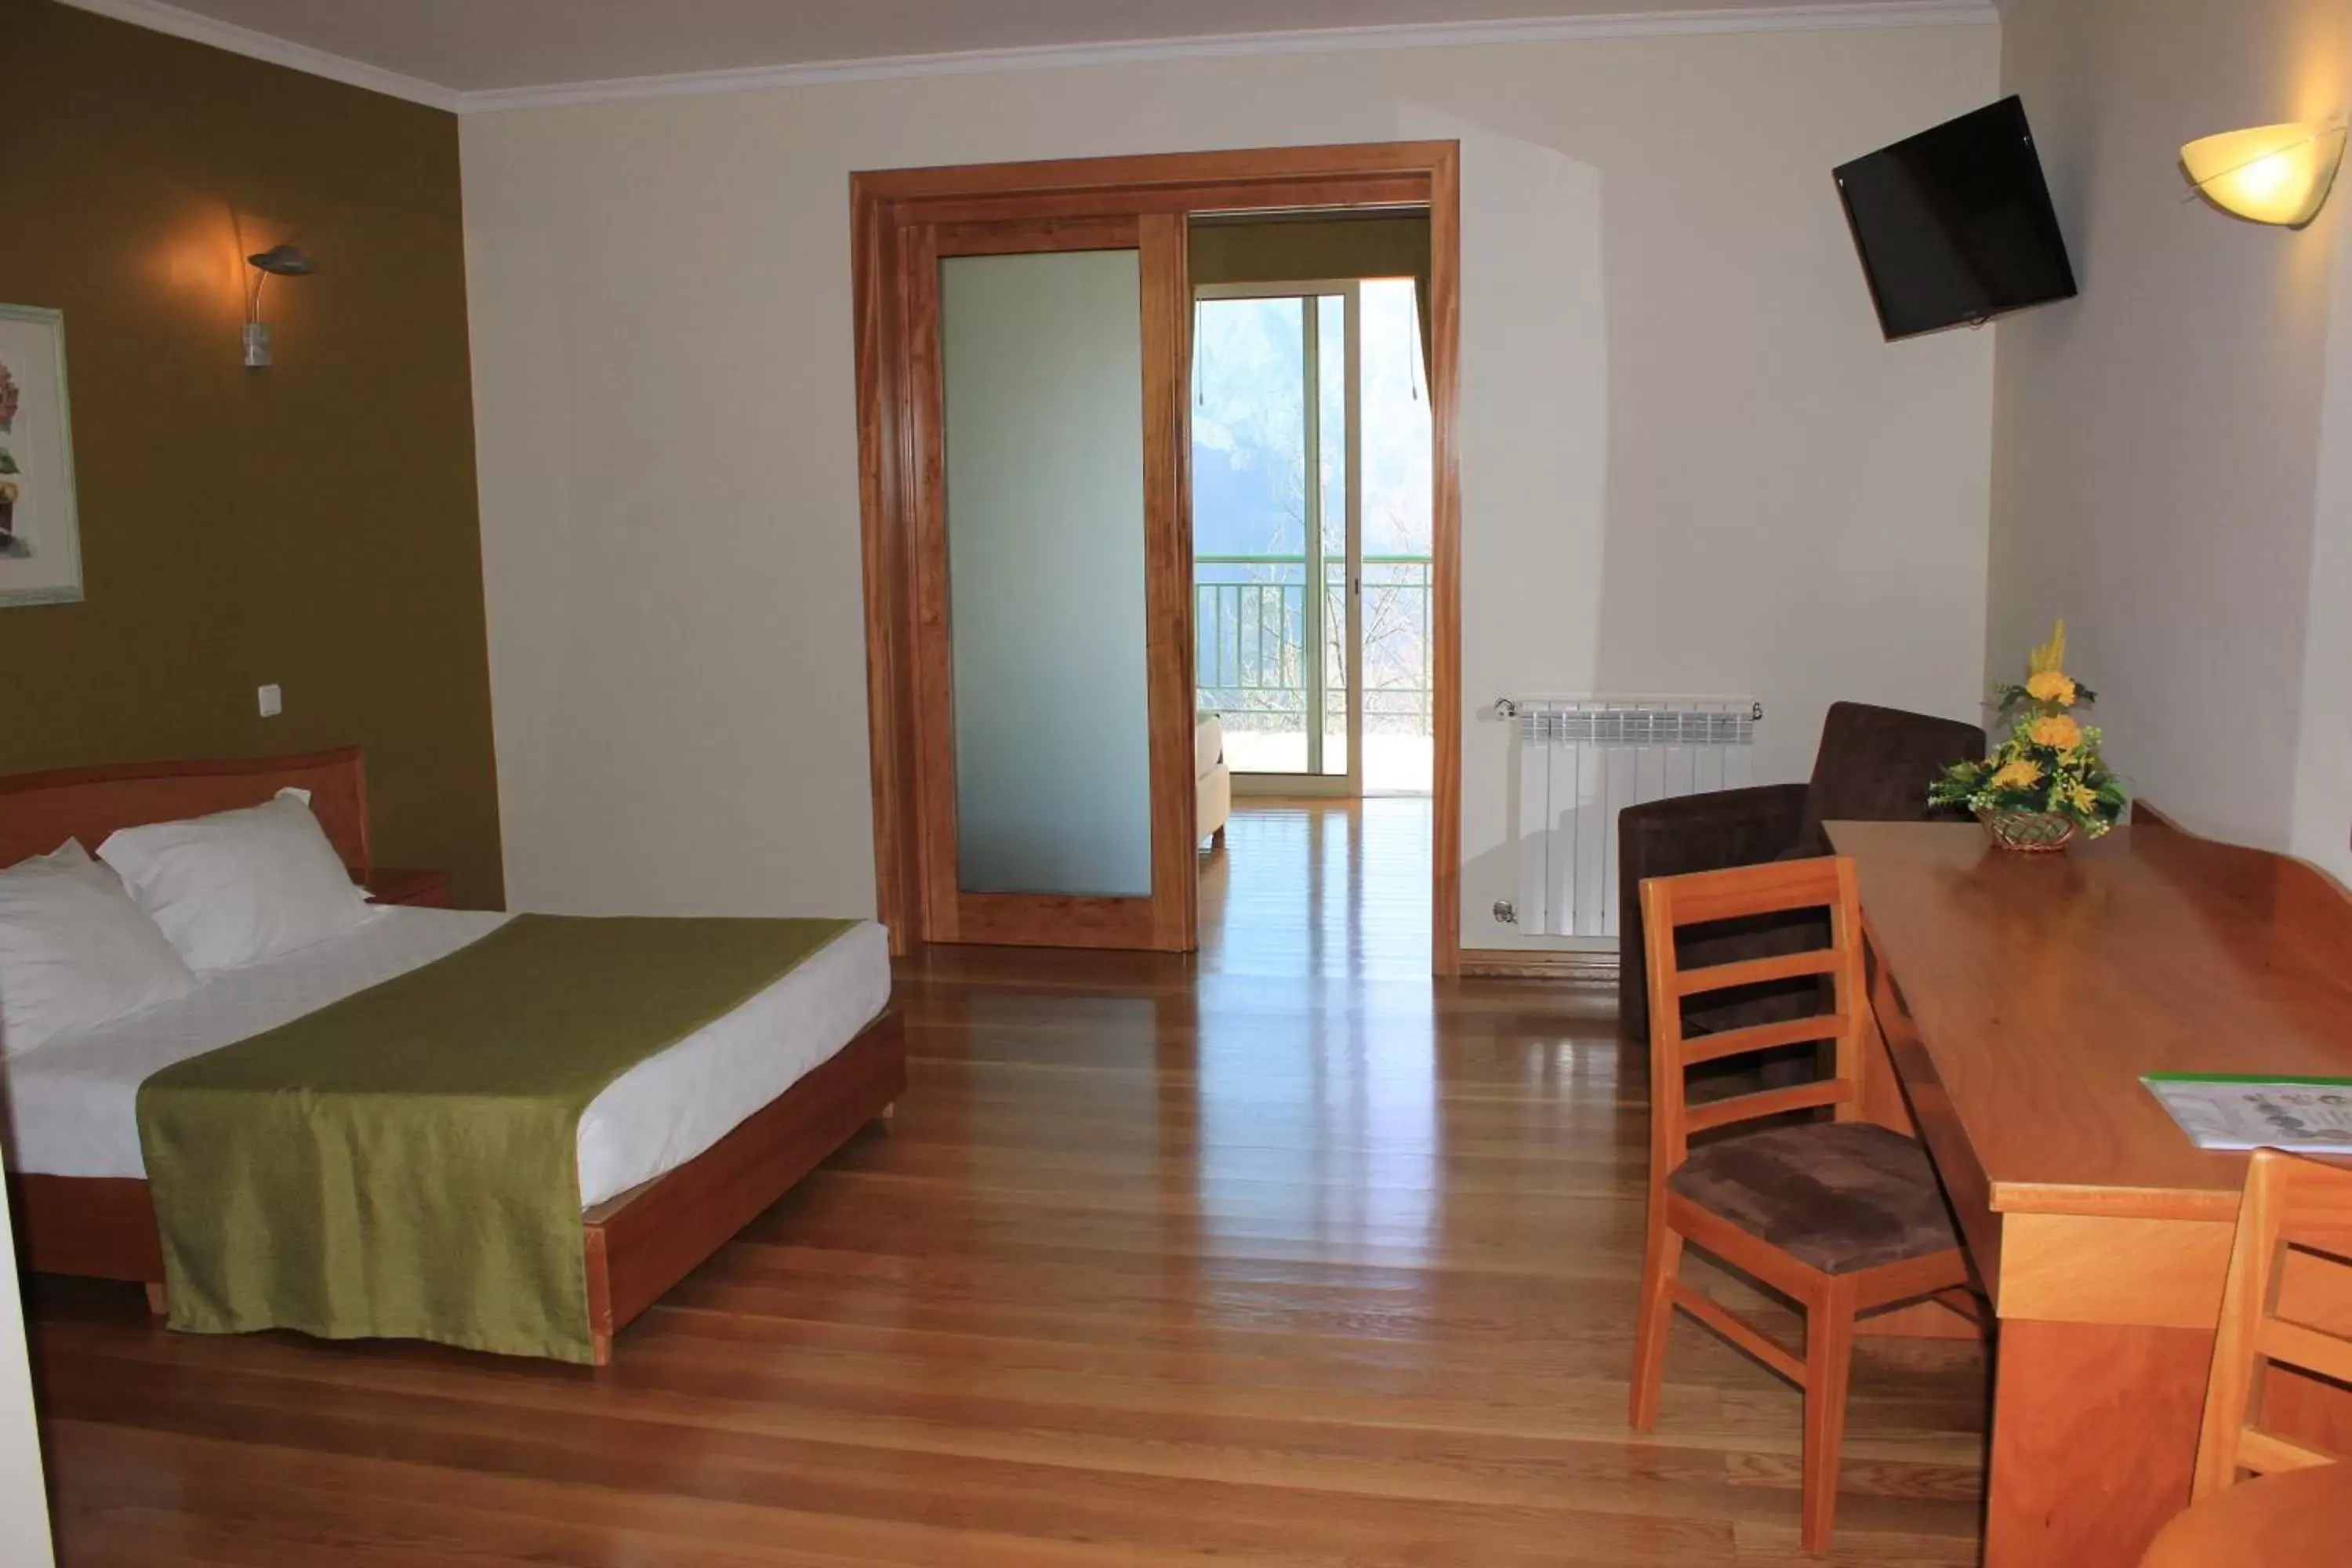 Family Room in Eira do Serrado - Hotel & Spa